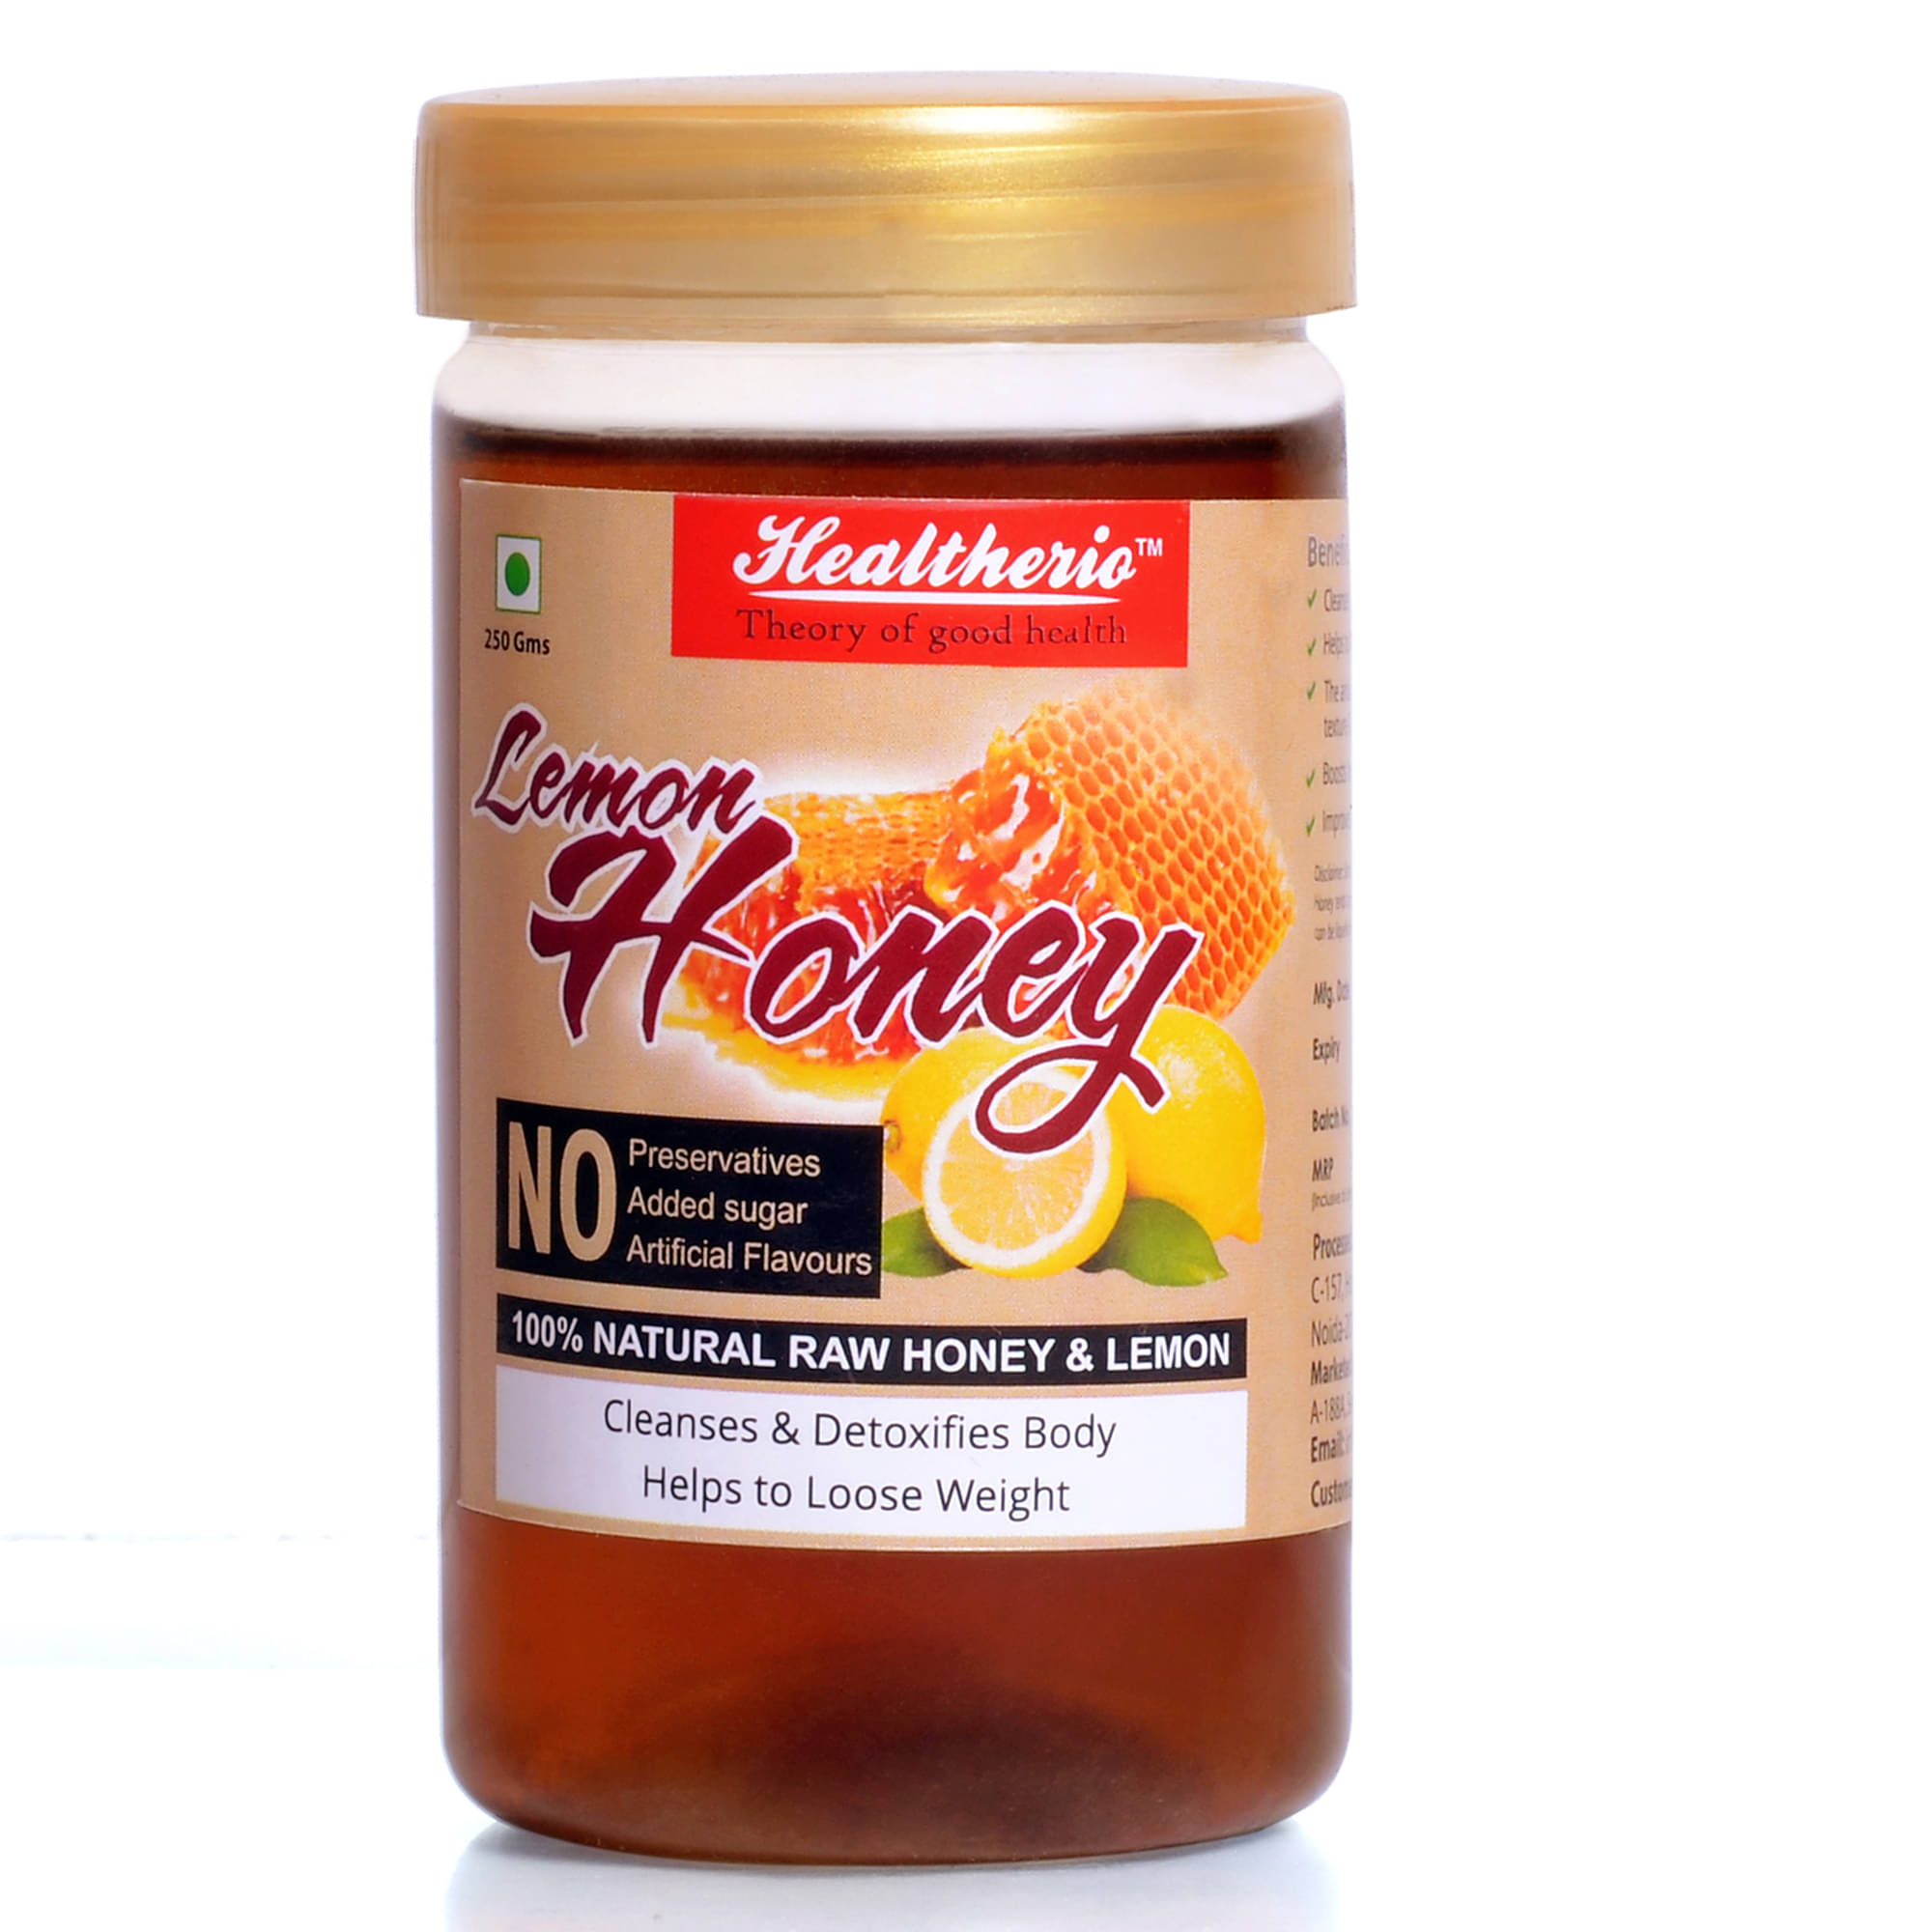 Lemon Honey Pack of 8 (2 quantity) at Rs.550 worth Rs.2800